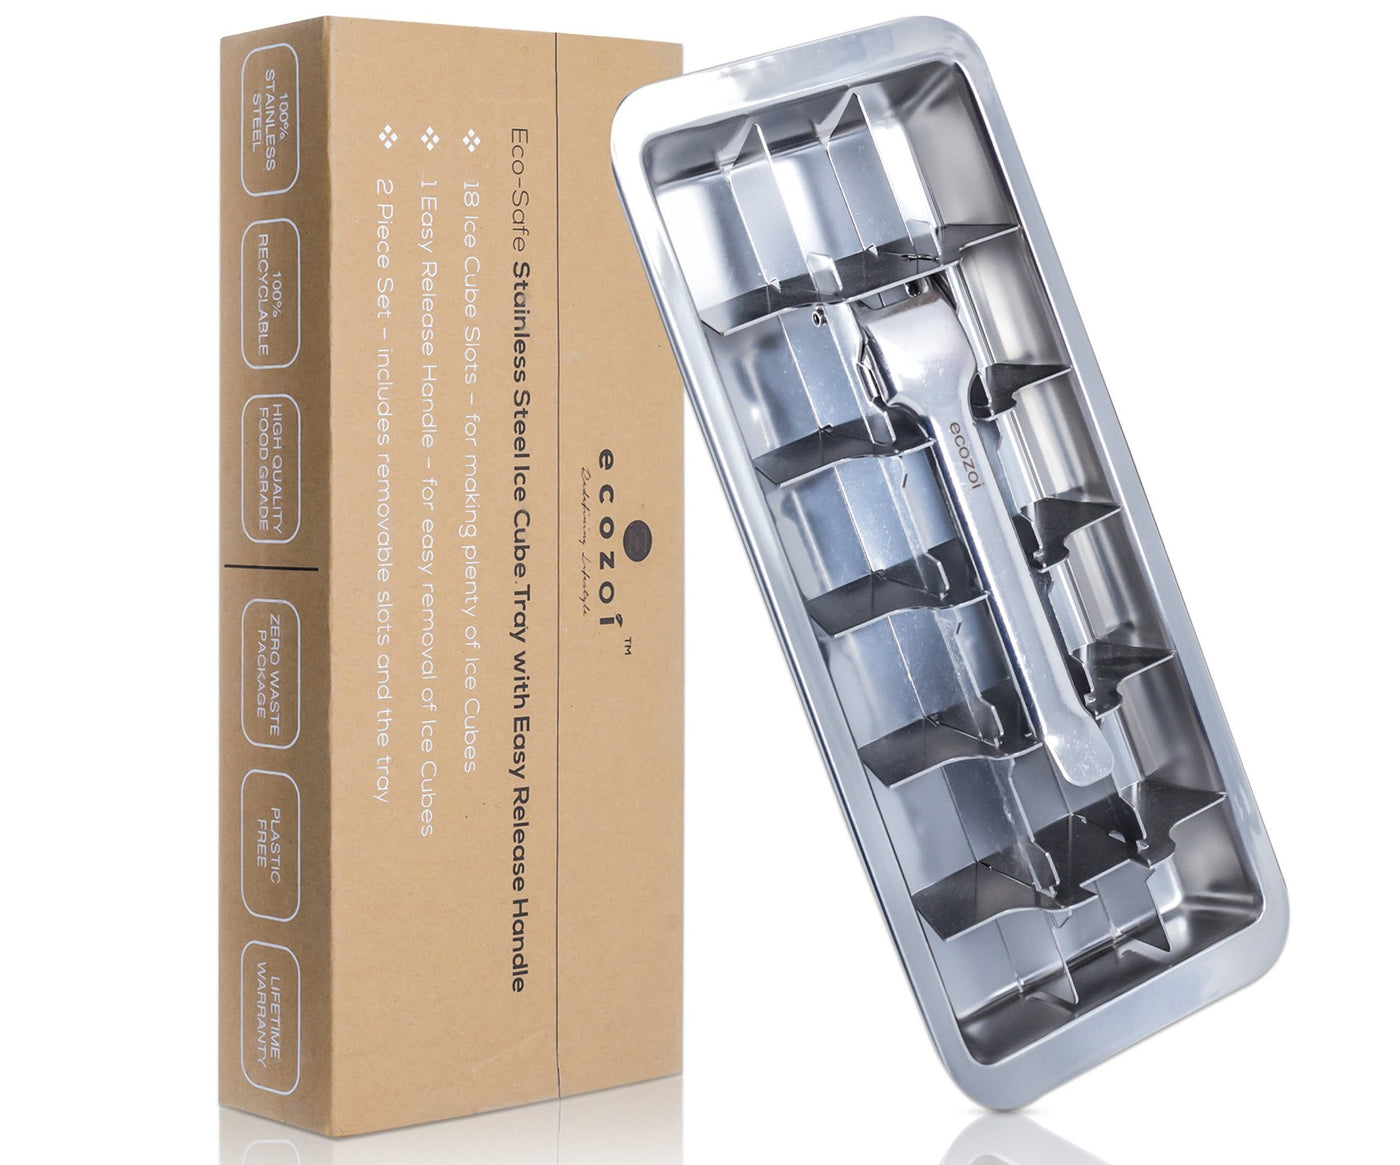 Ecozoi Stainless Steel Ice Cube Tray with Easy Release Handle [BPA free, plastic free, metal ice tray] freeshipping - ecozoi